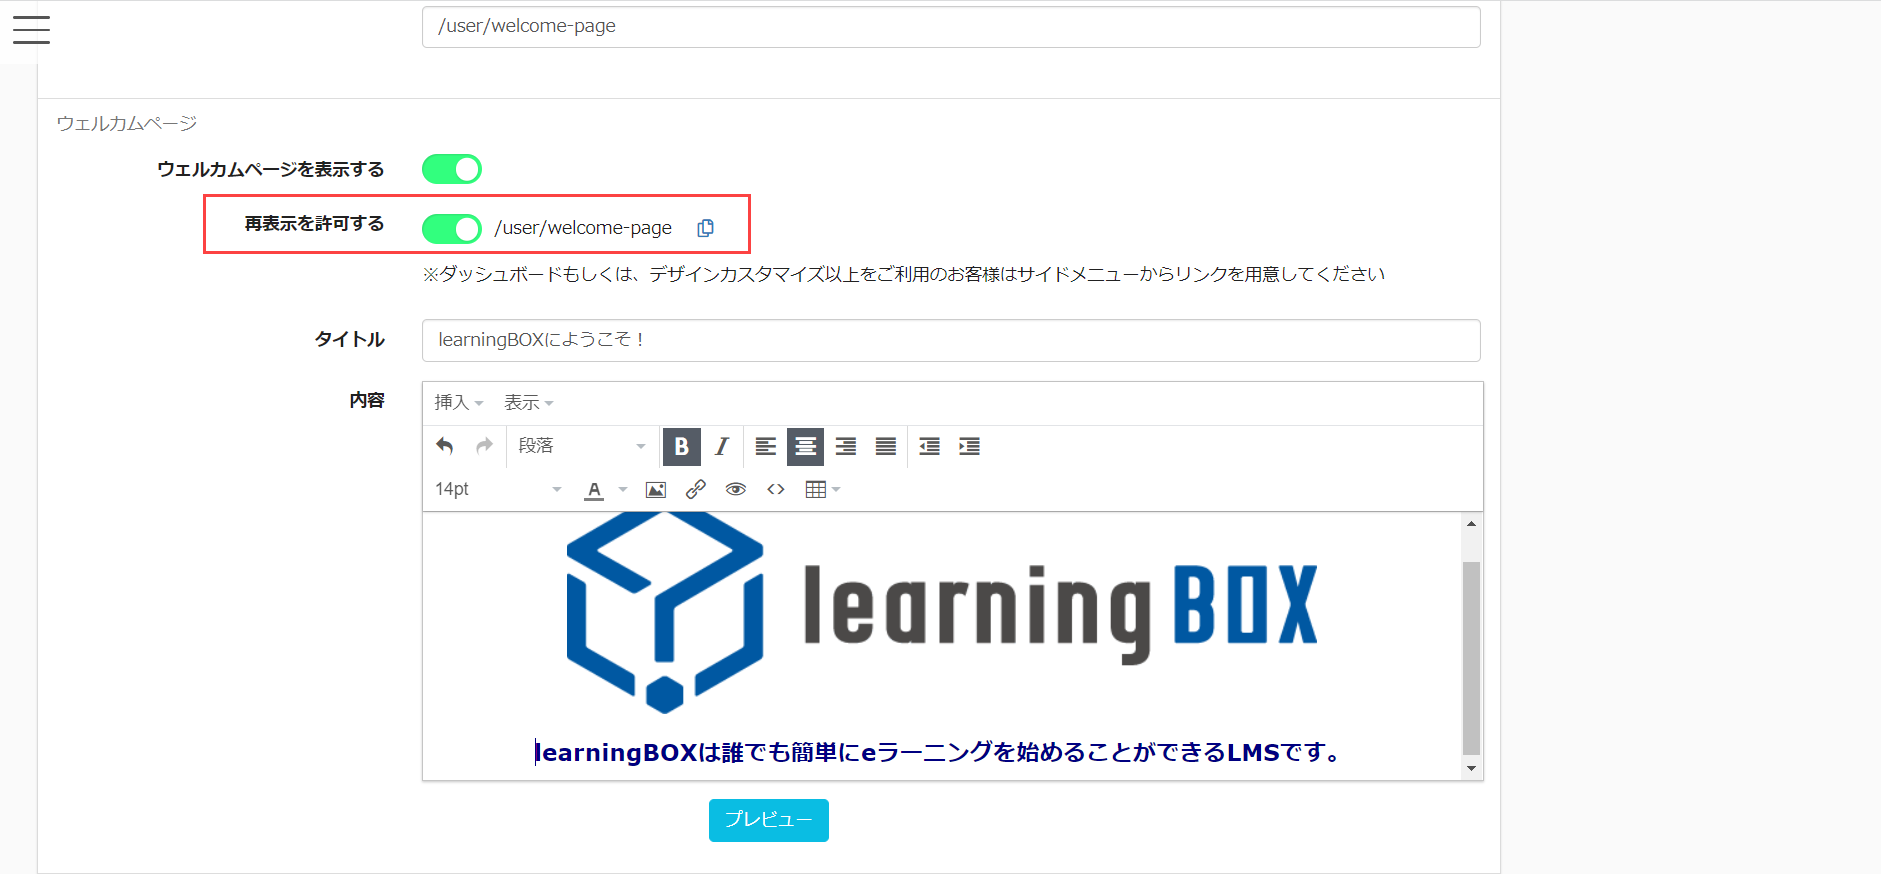 learningBOX-ログイン直後のページ変更機能